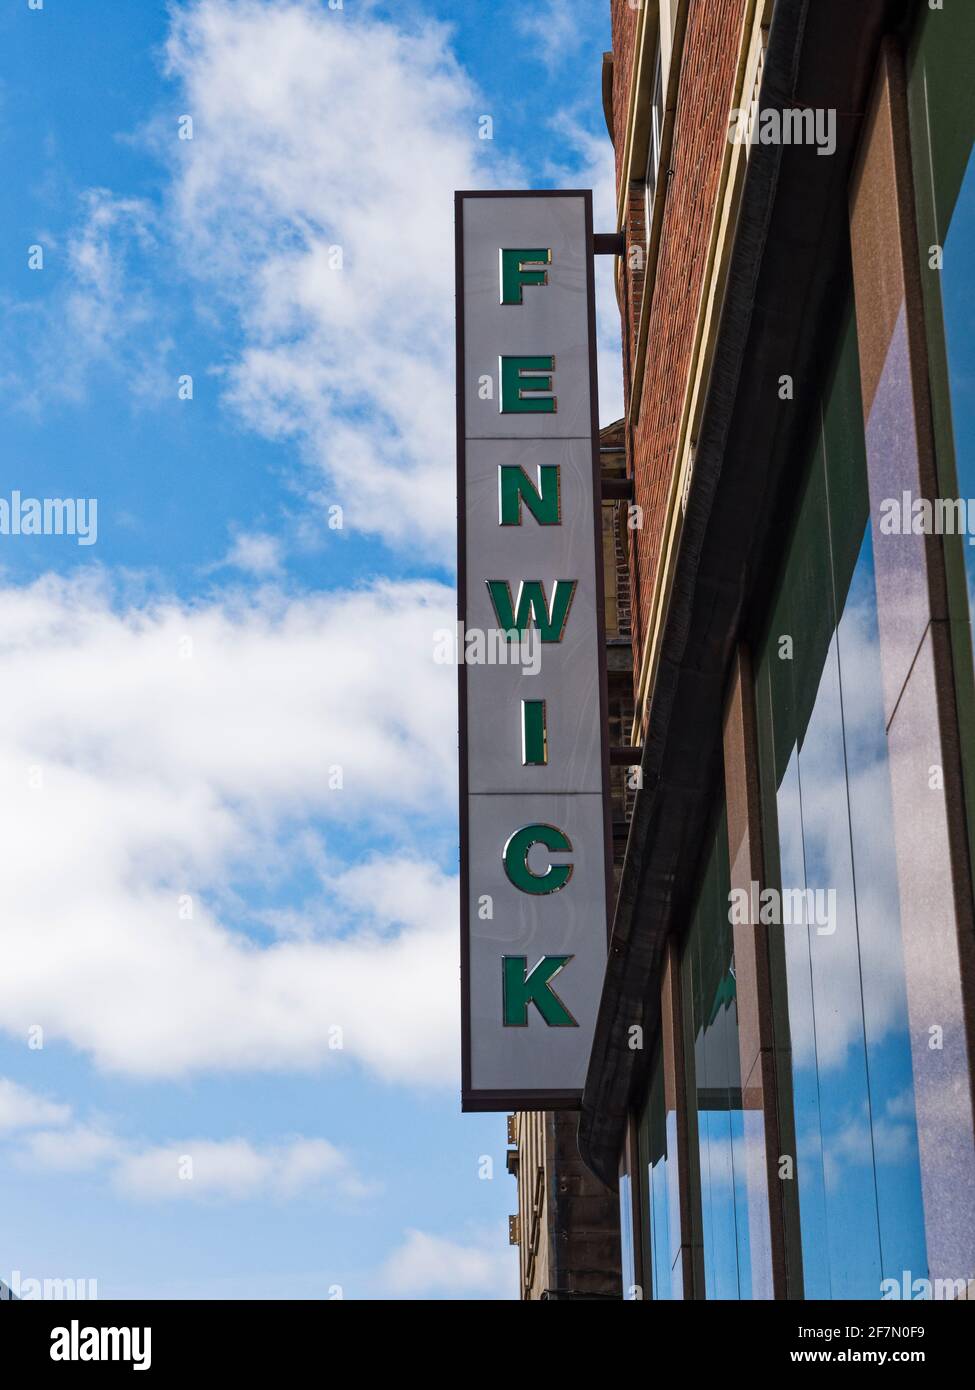 Fenwick department store sign on Northumberland Street, Newcastle upon Tyne, UK shuttered during the coronavirus pandemic. Stock Photo